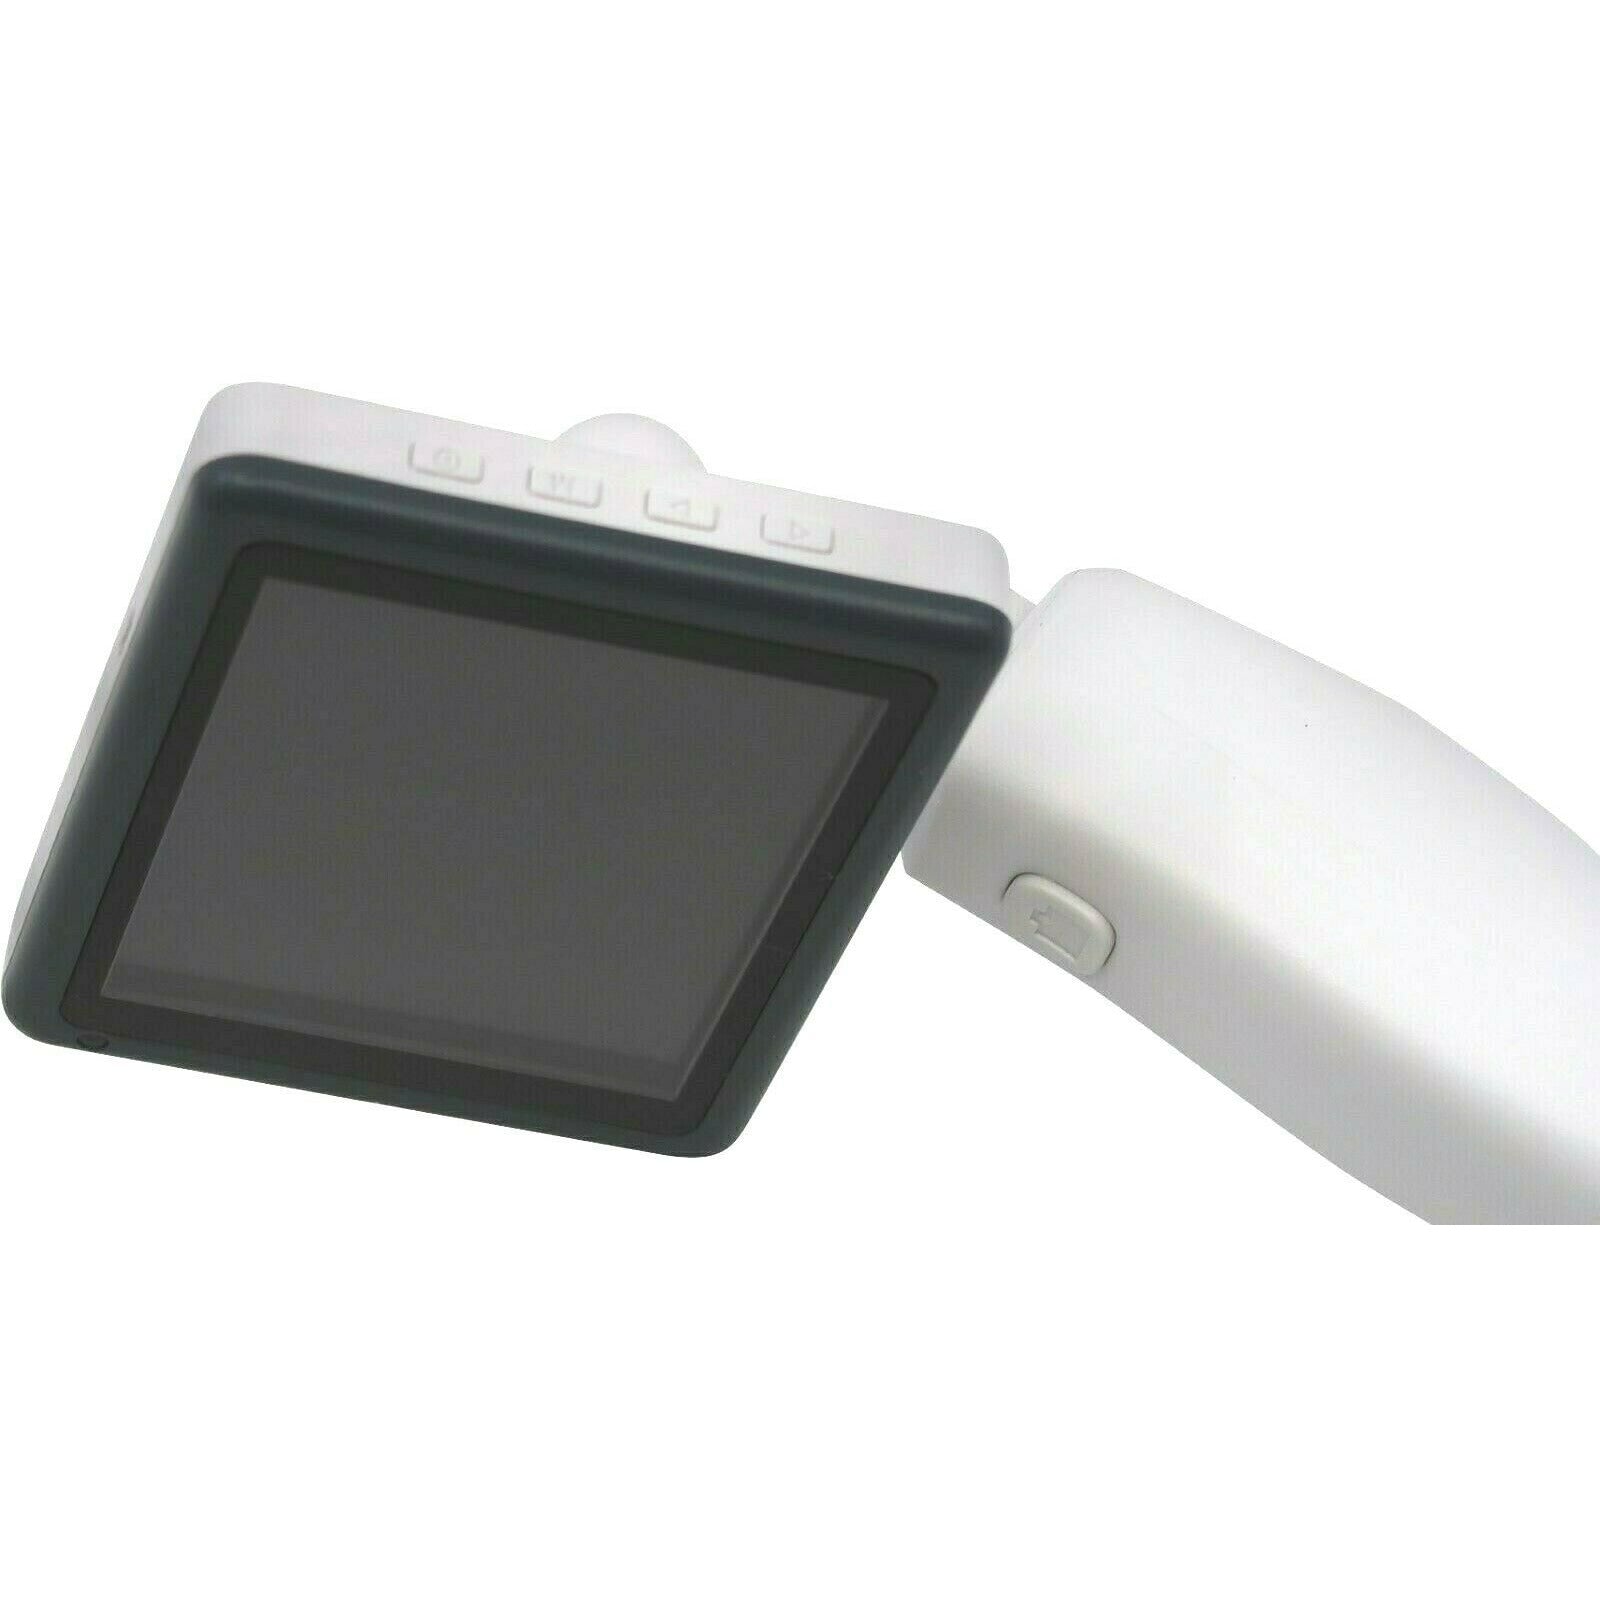 CapnoVision Pro Video Laryngoscope Kit